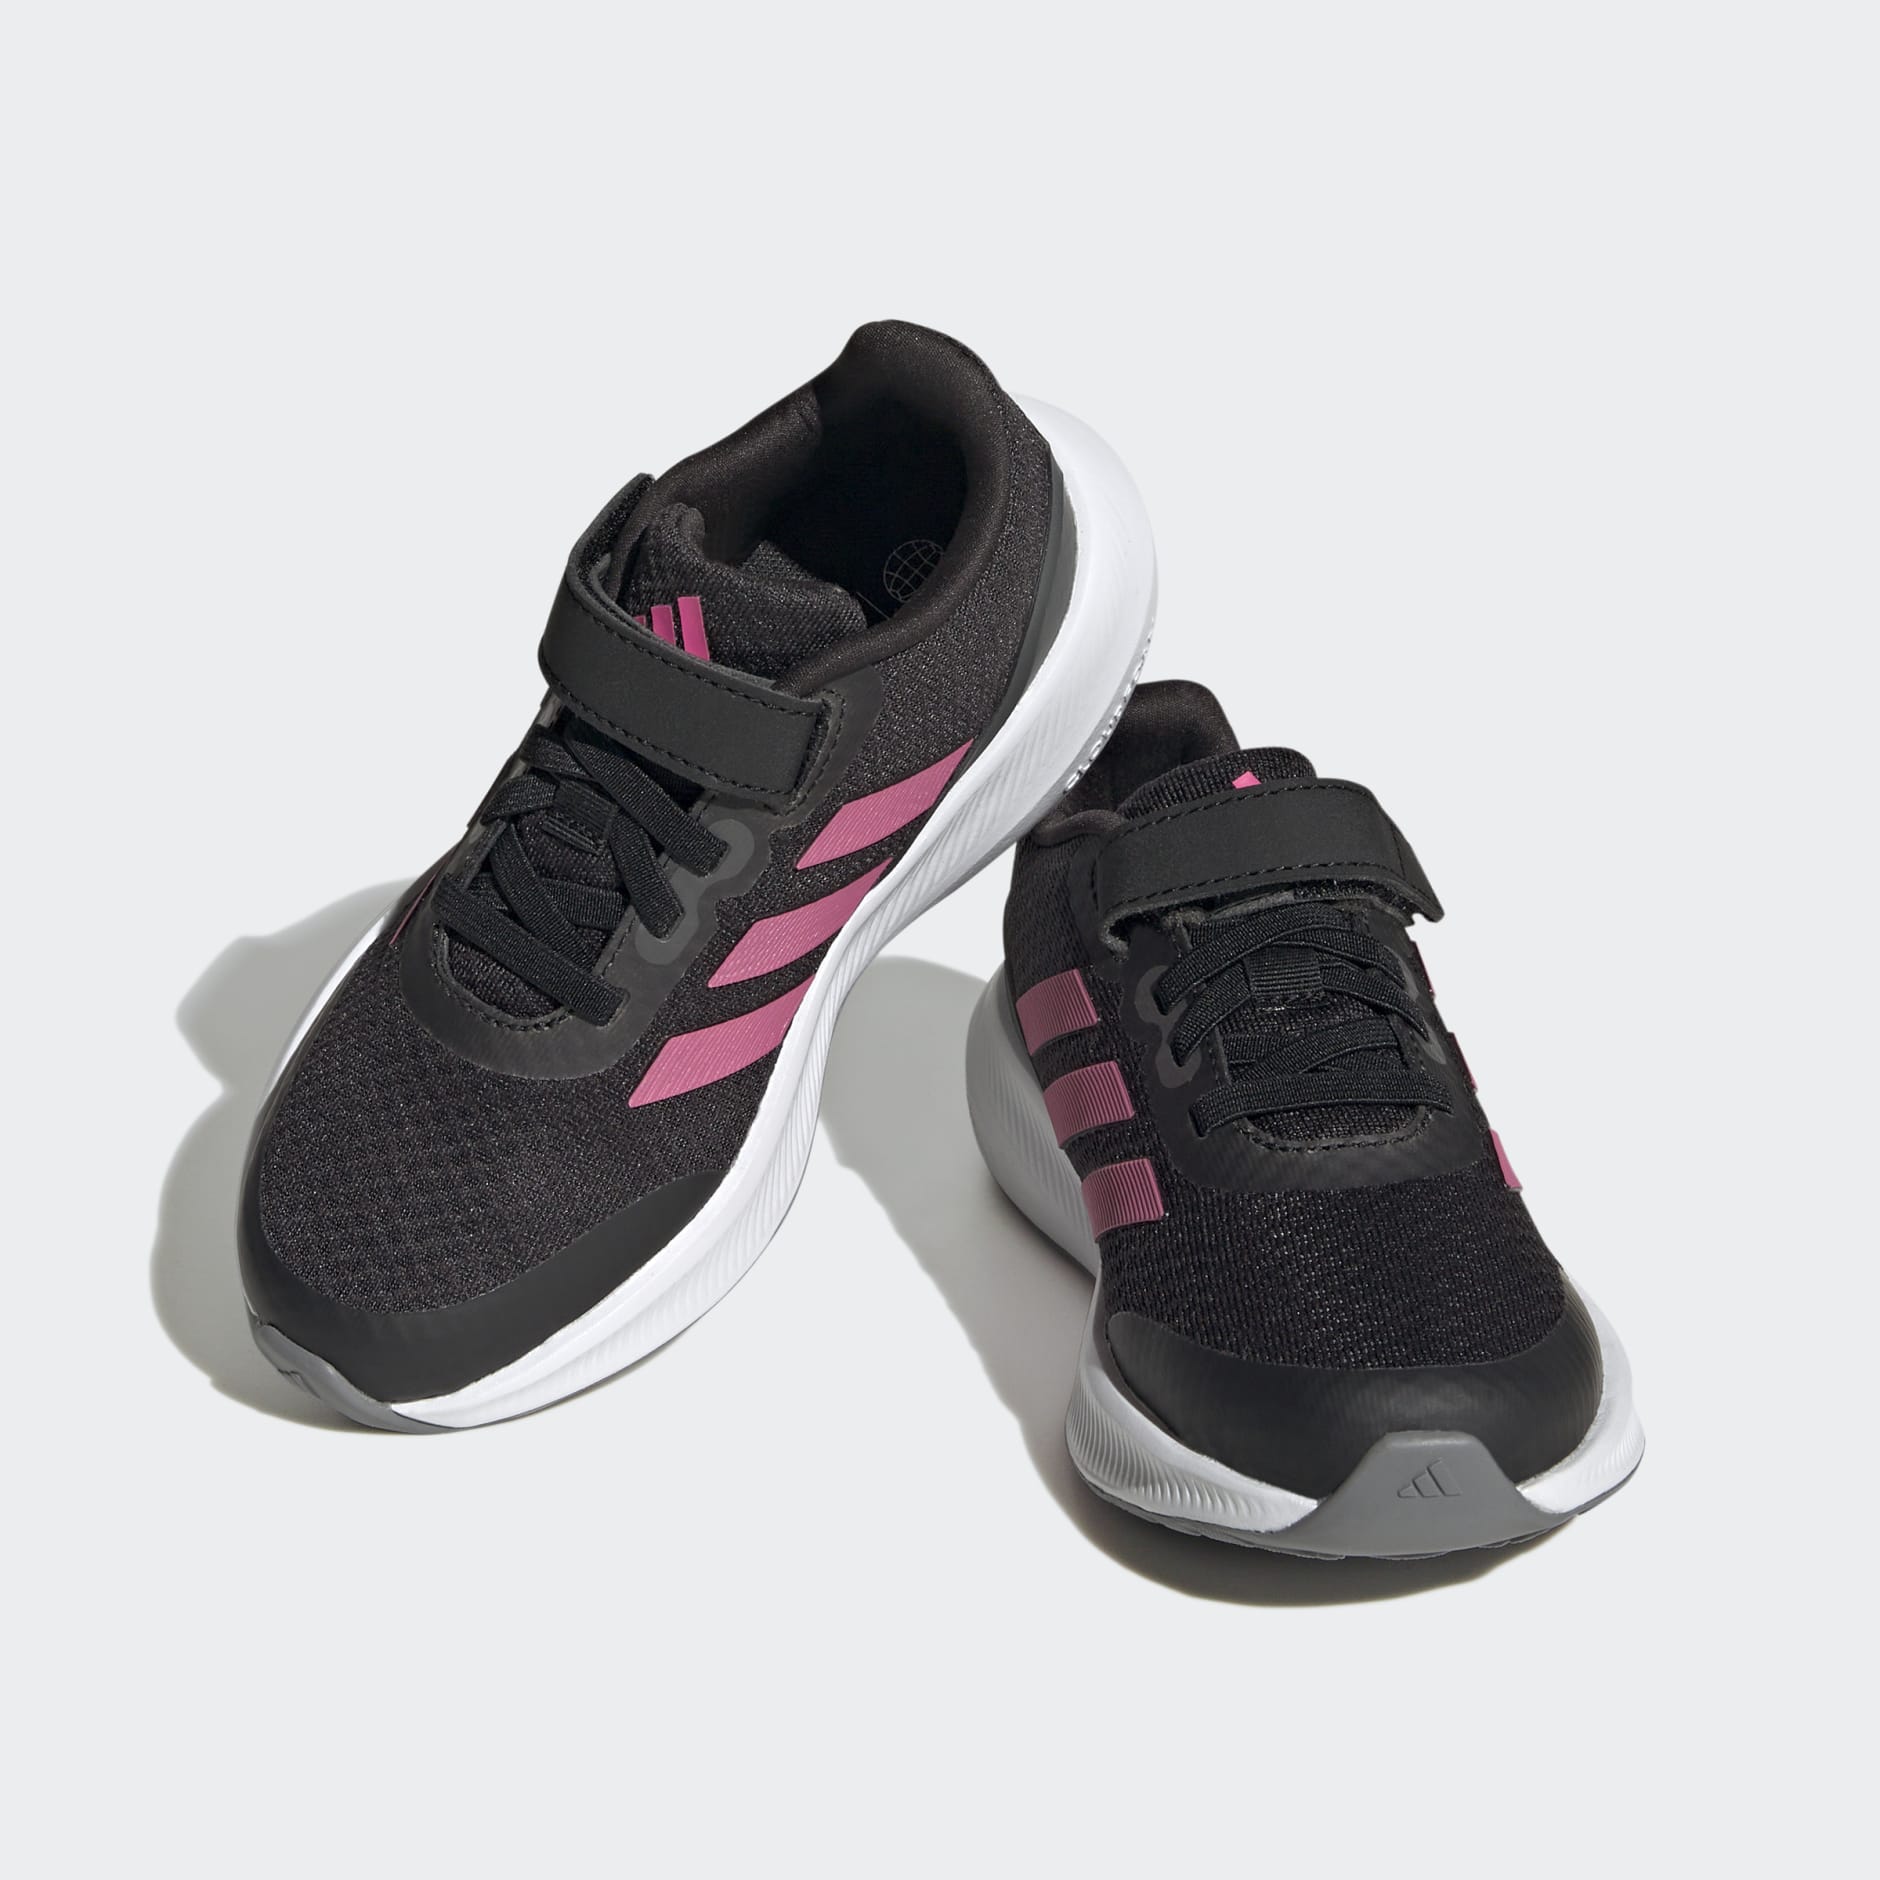 Shoes - Shoes Black RunFalcon | - adidas Lace Saudi Top Kids Elastic 3.0 Strap Arabia